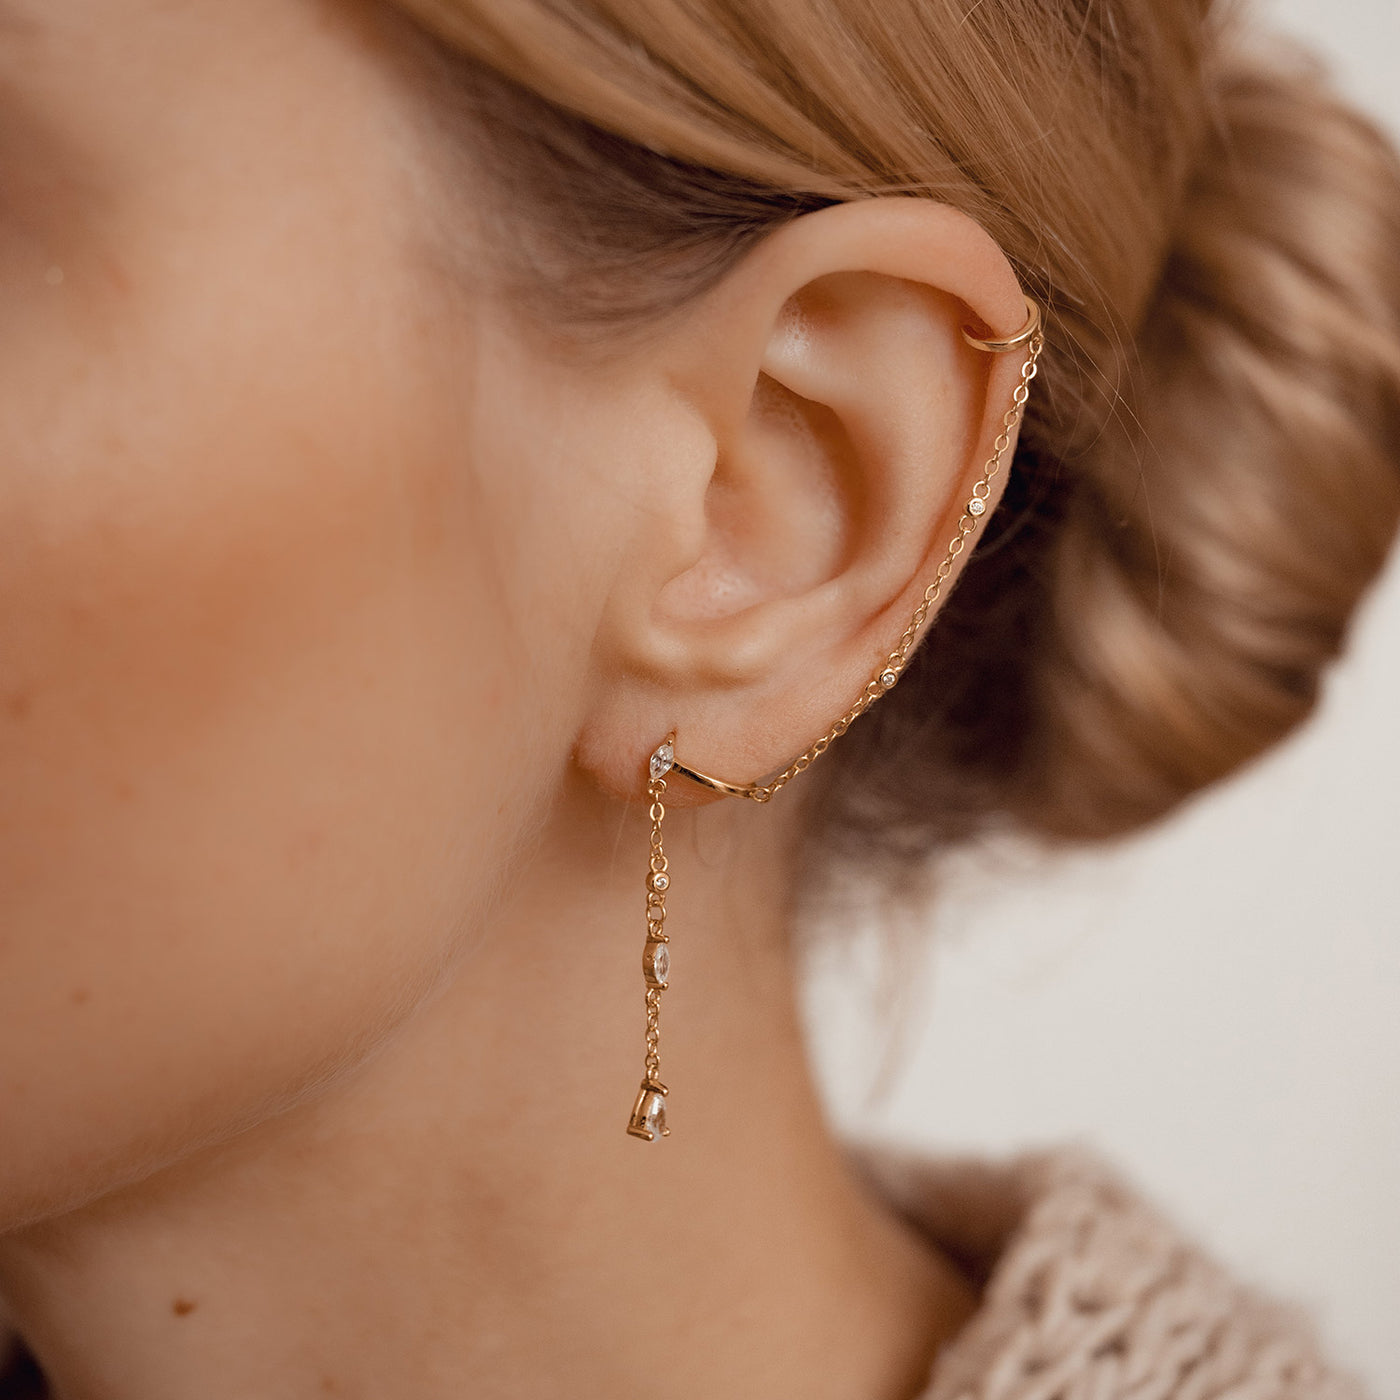 Radiant Doppel Ear Cuff Ohrring mit Kette Sterlingsilber Gold